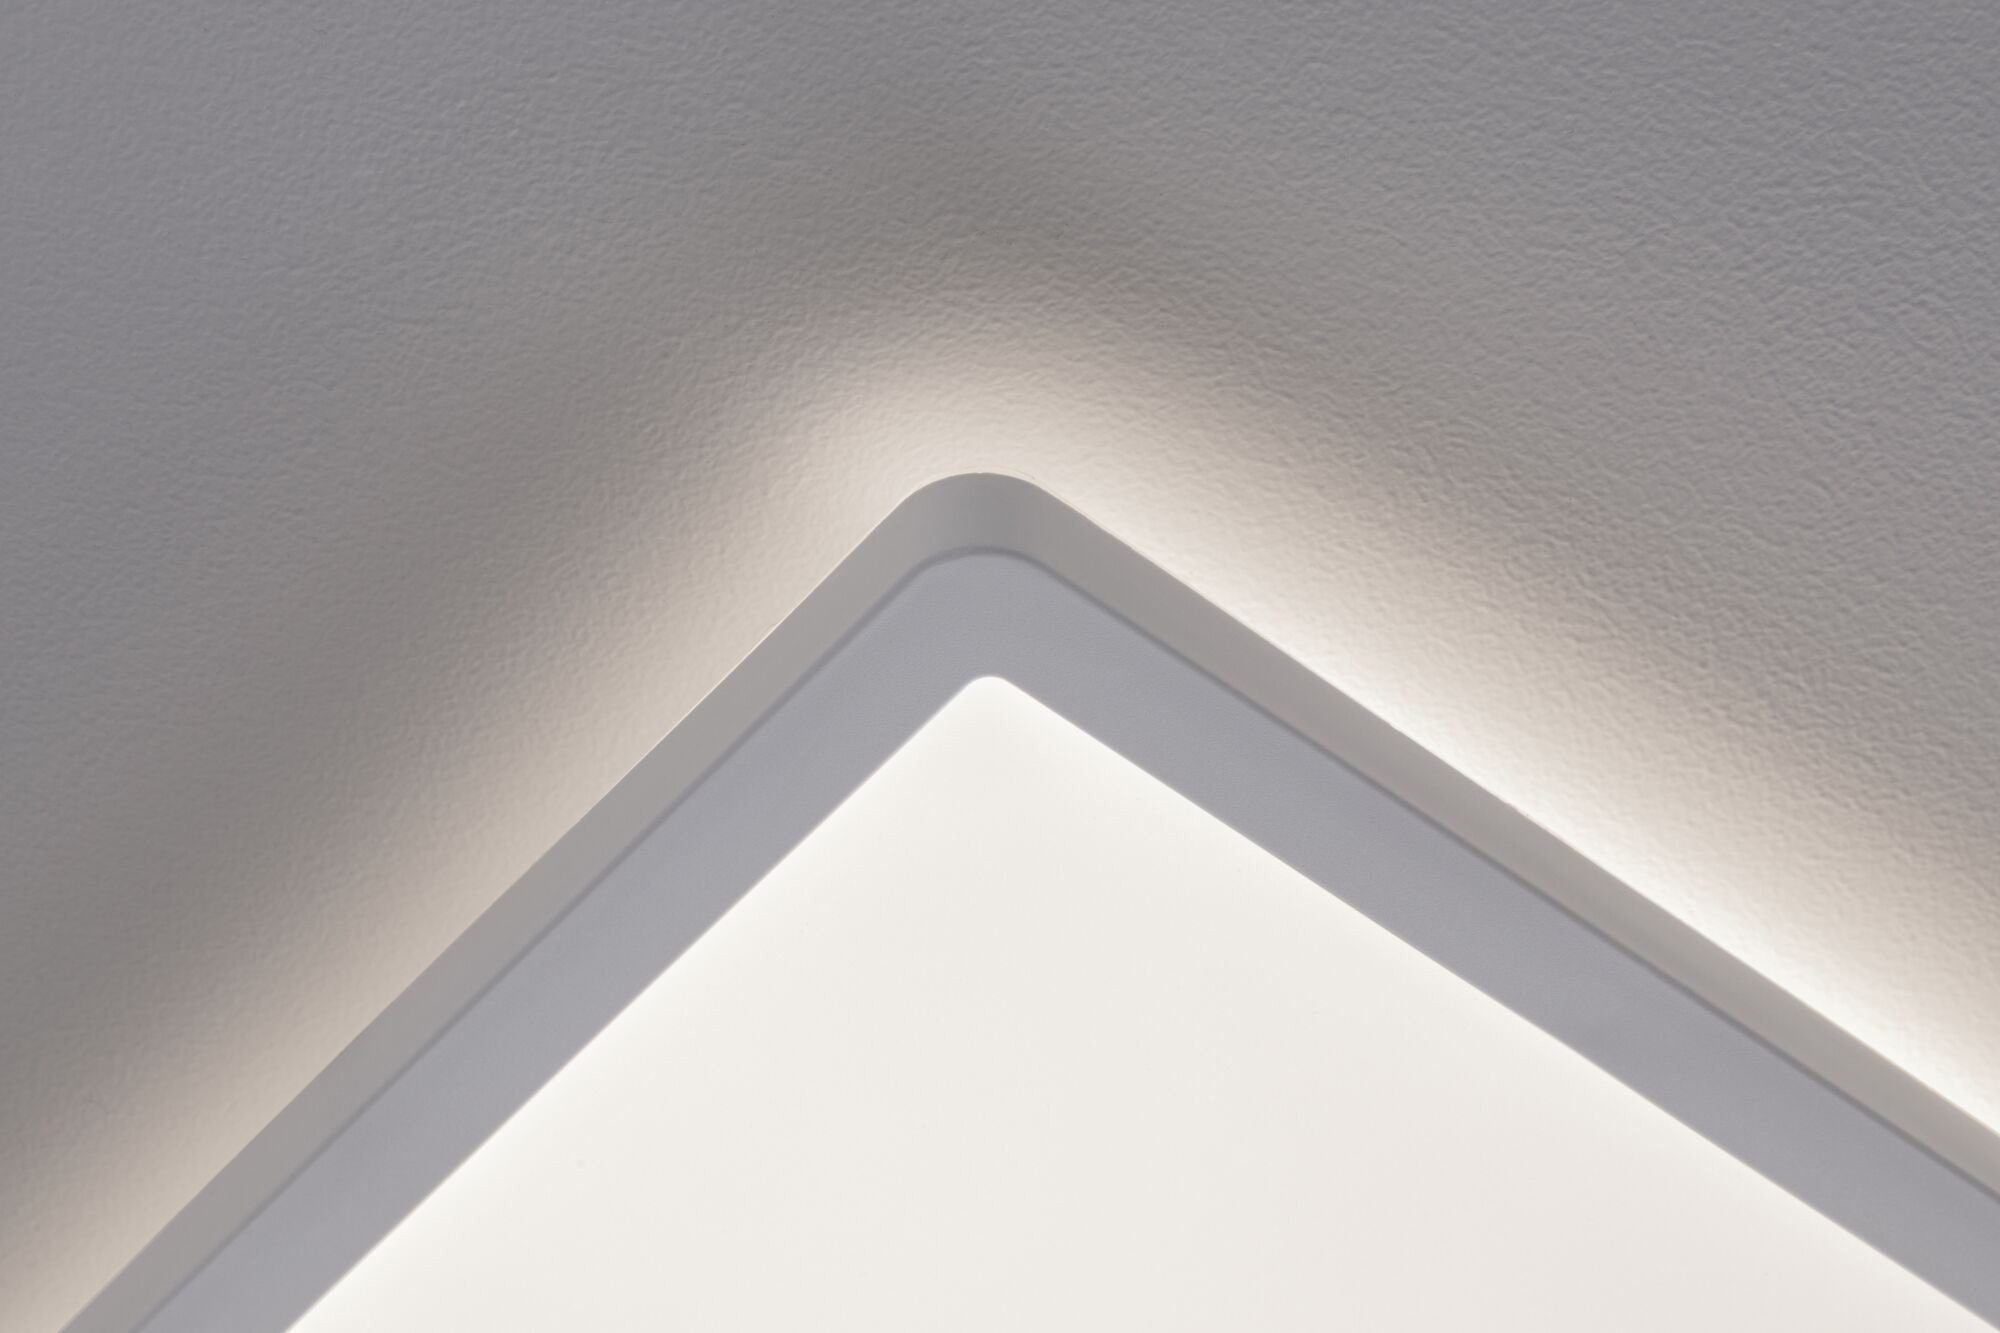 LED Neutralweiß fest integriert, Shine, Atria Paulmann LED Panel